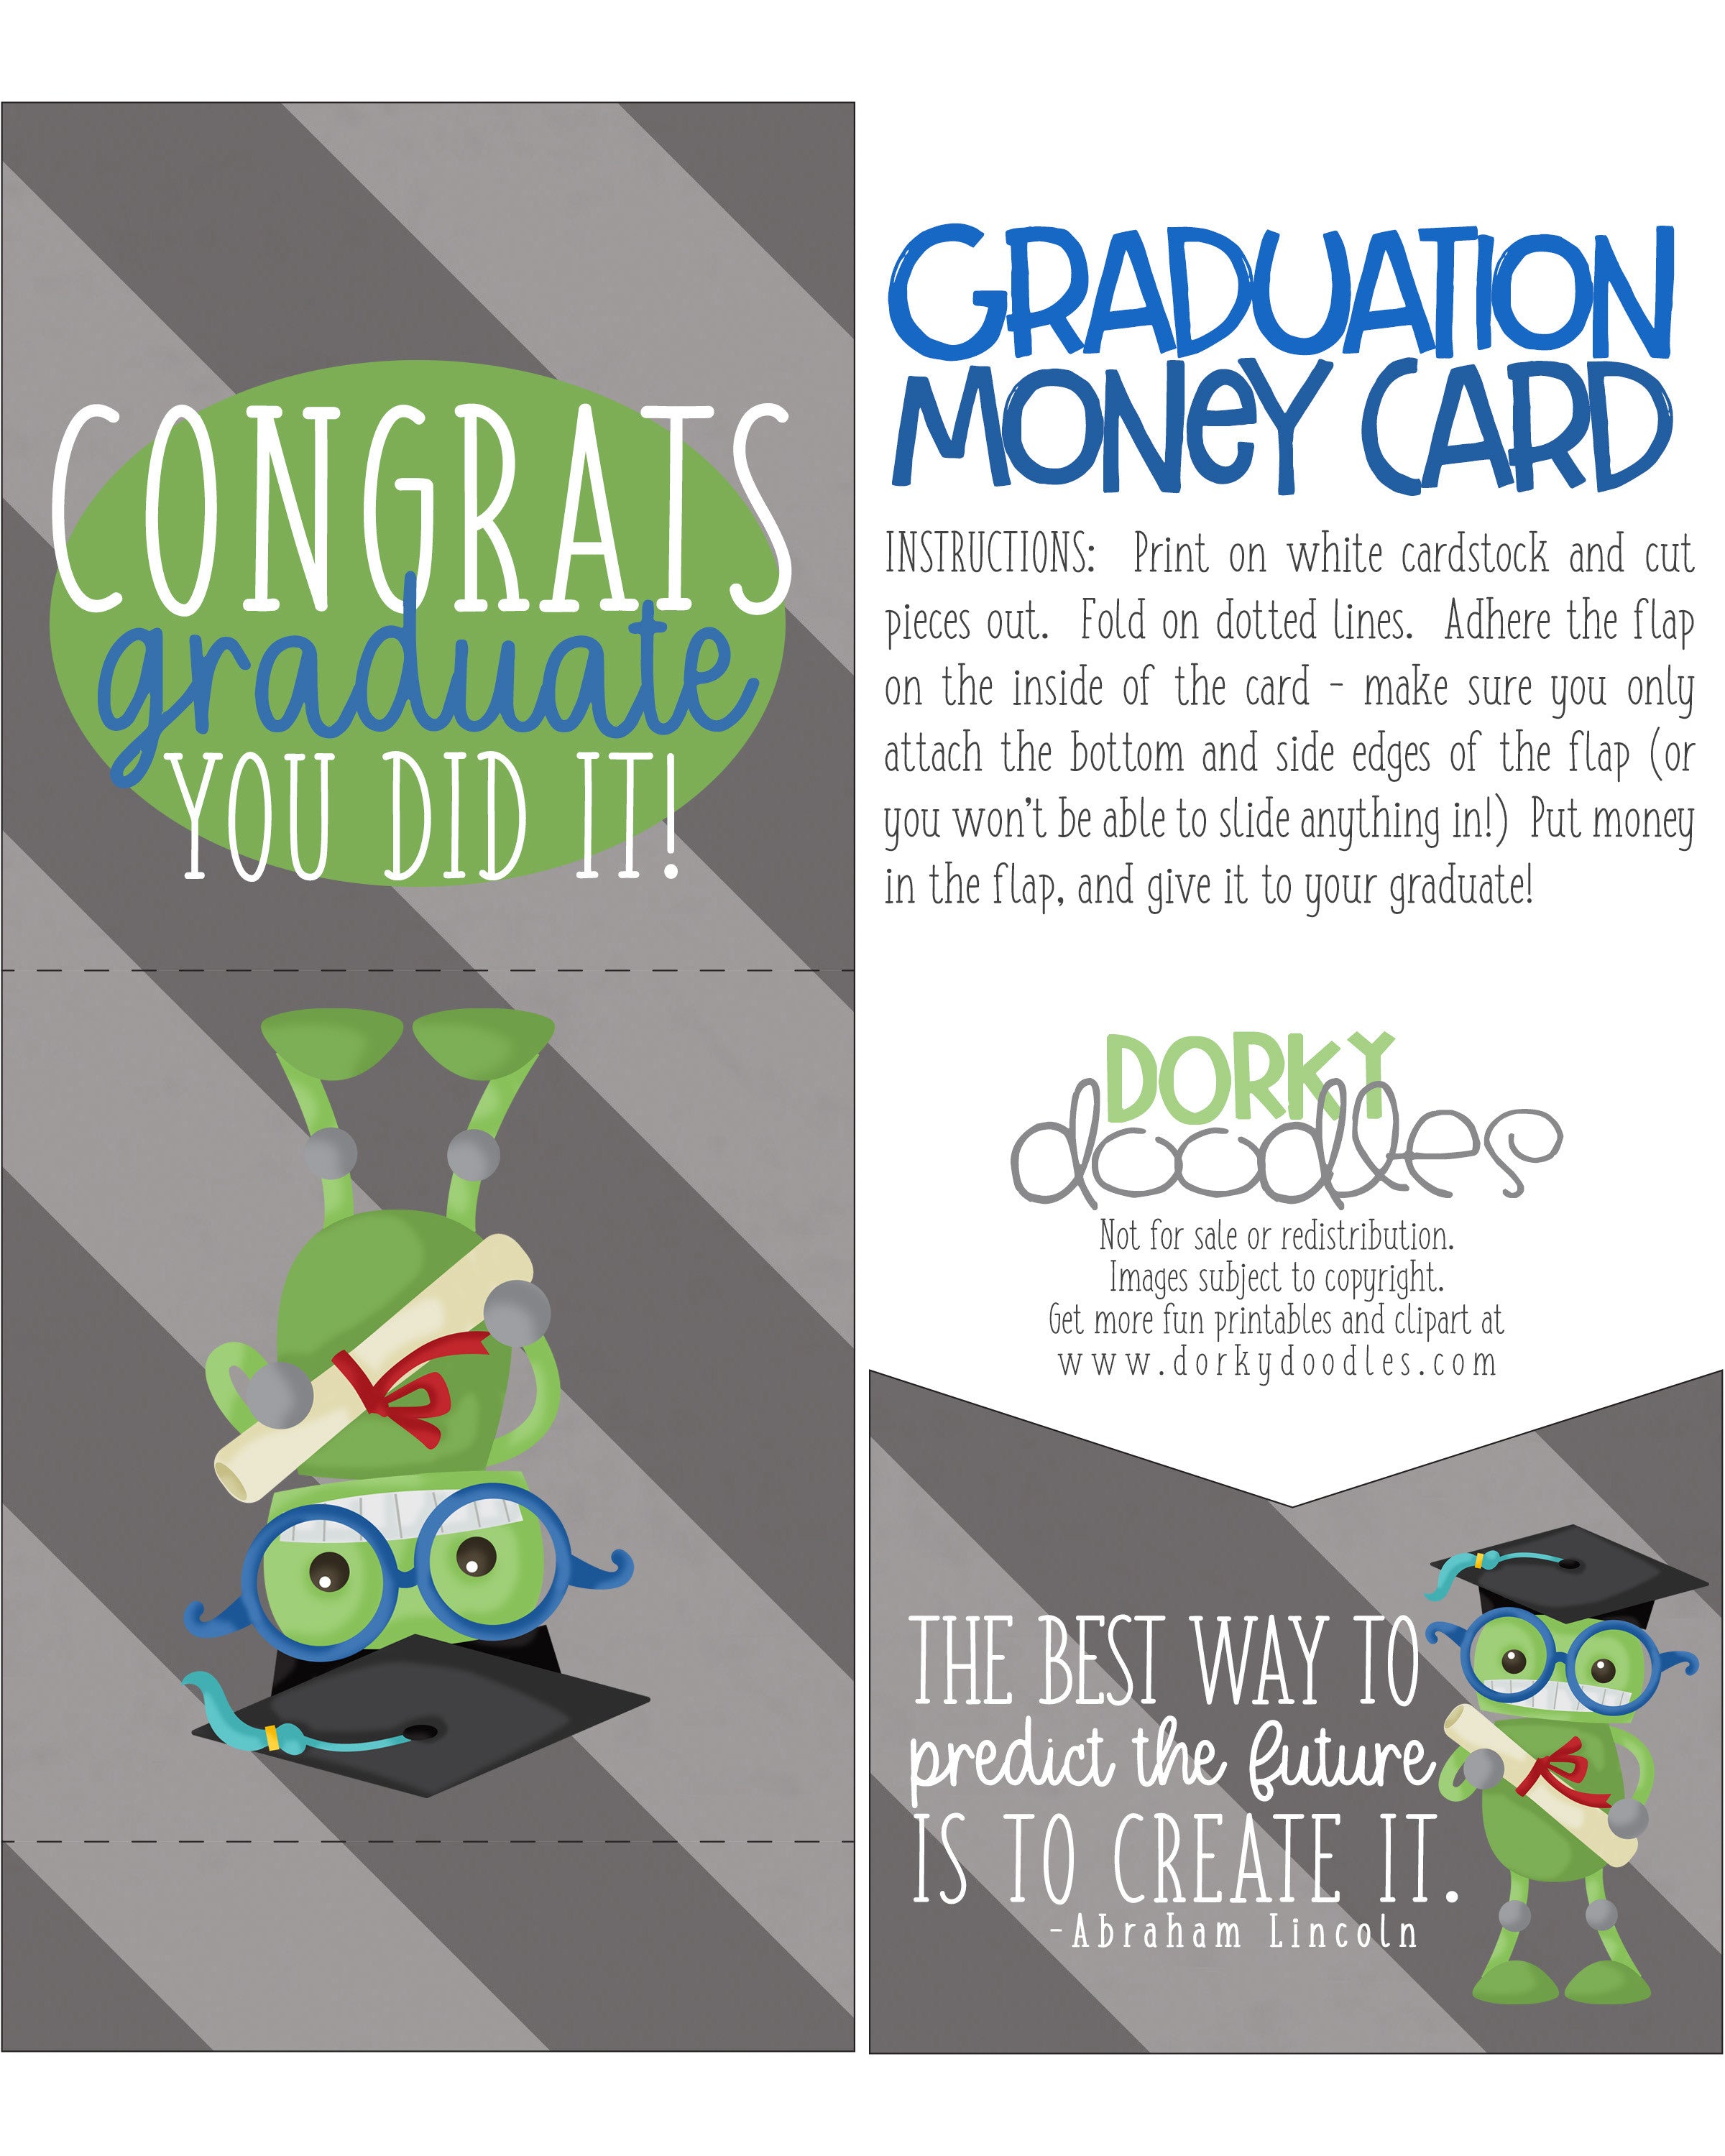 graduation-money-card-printable-dorky-doodles